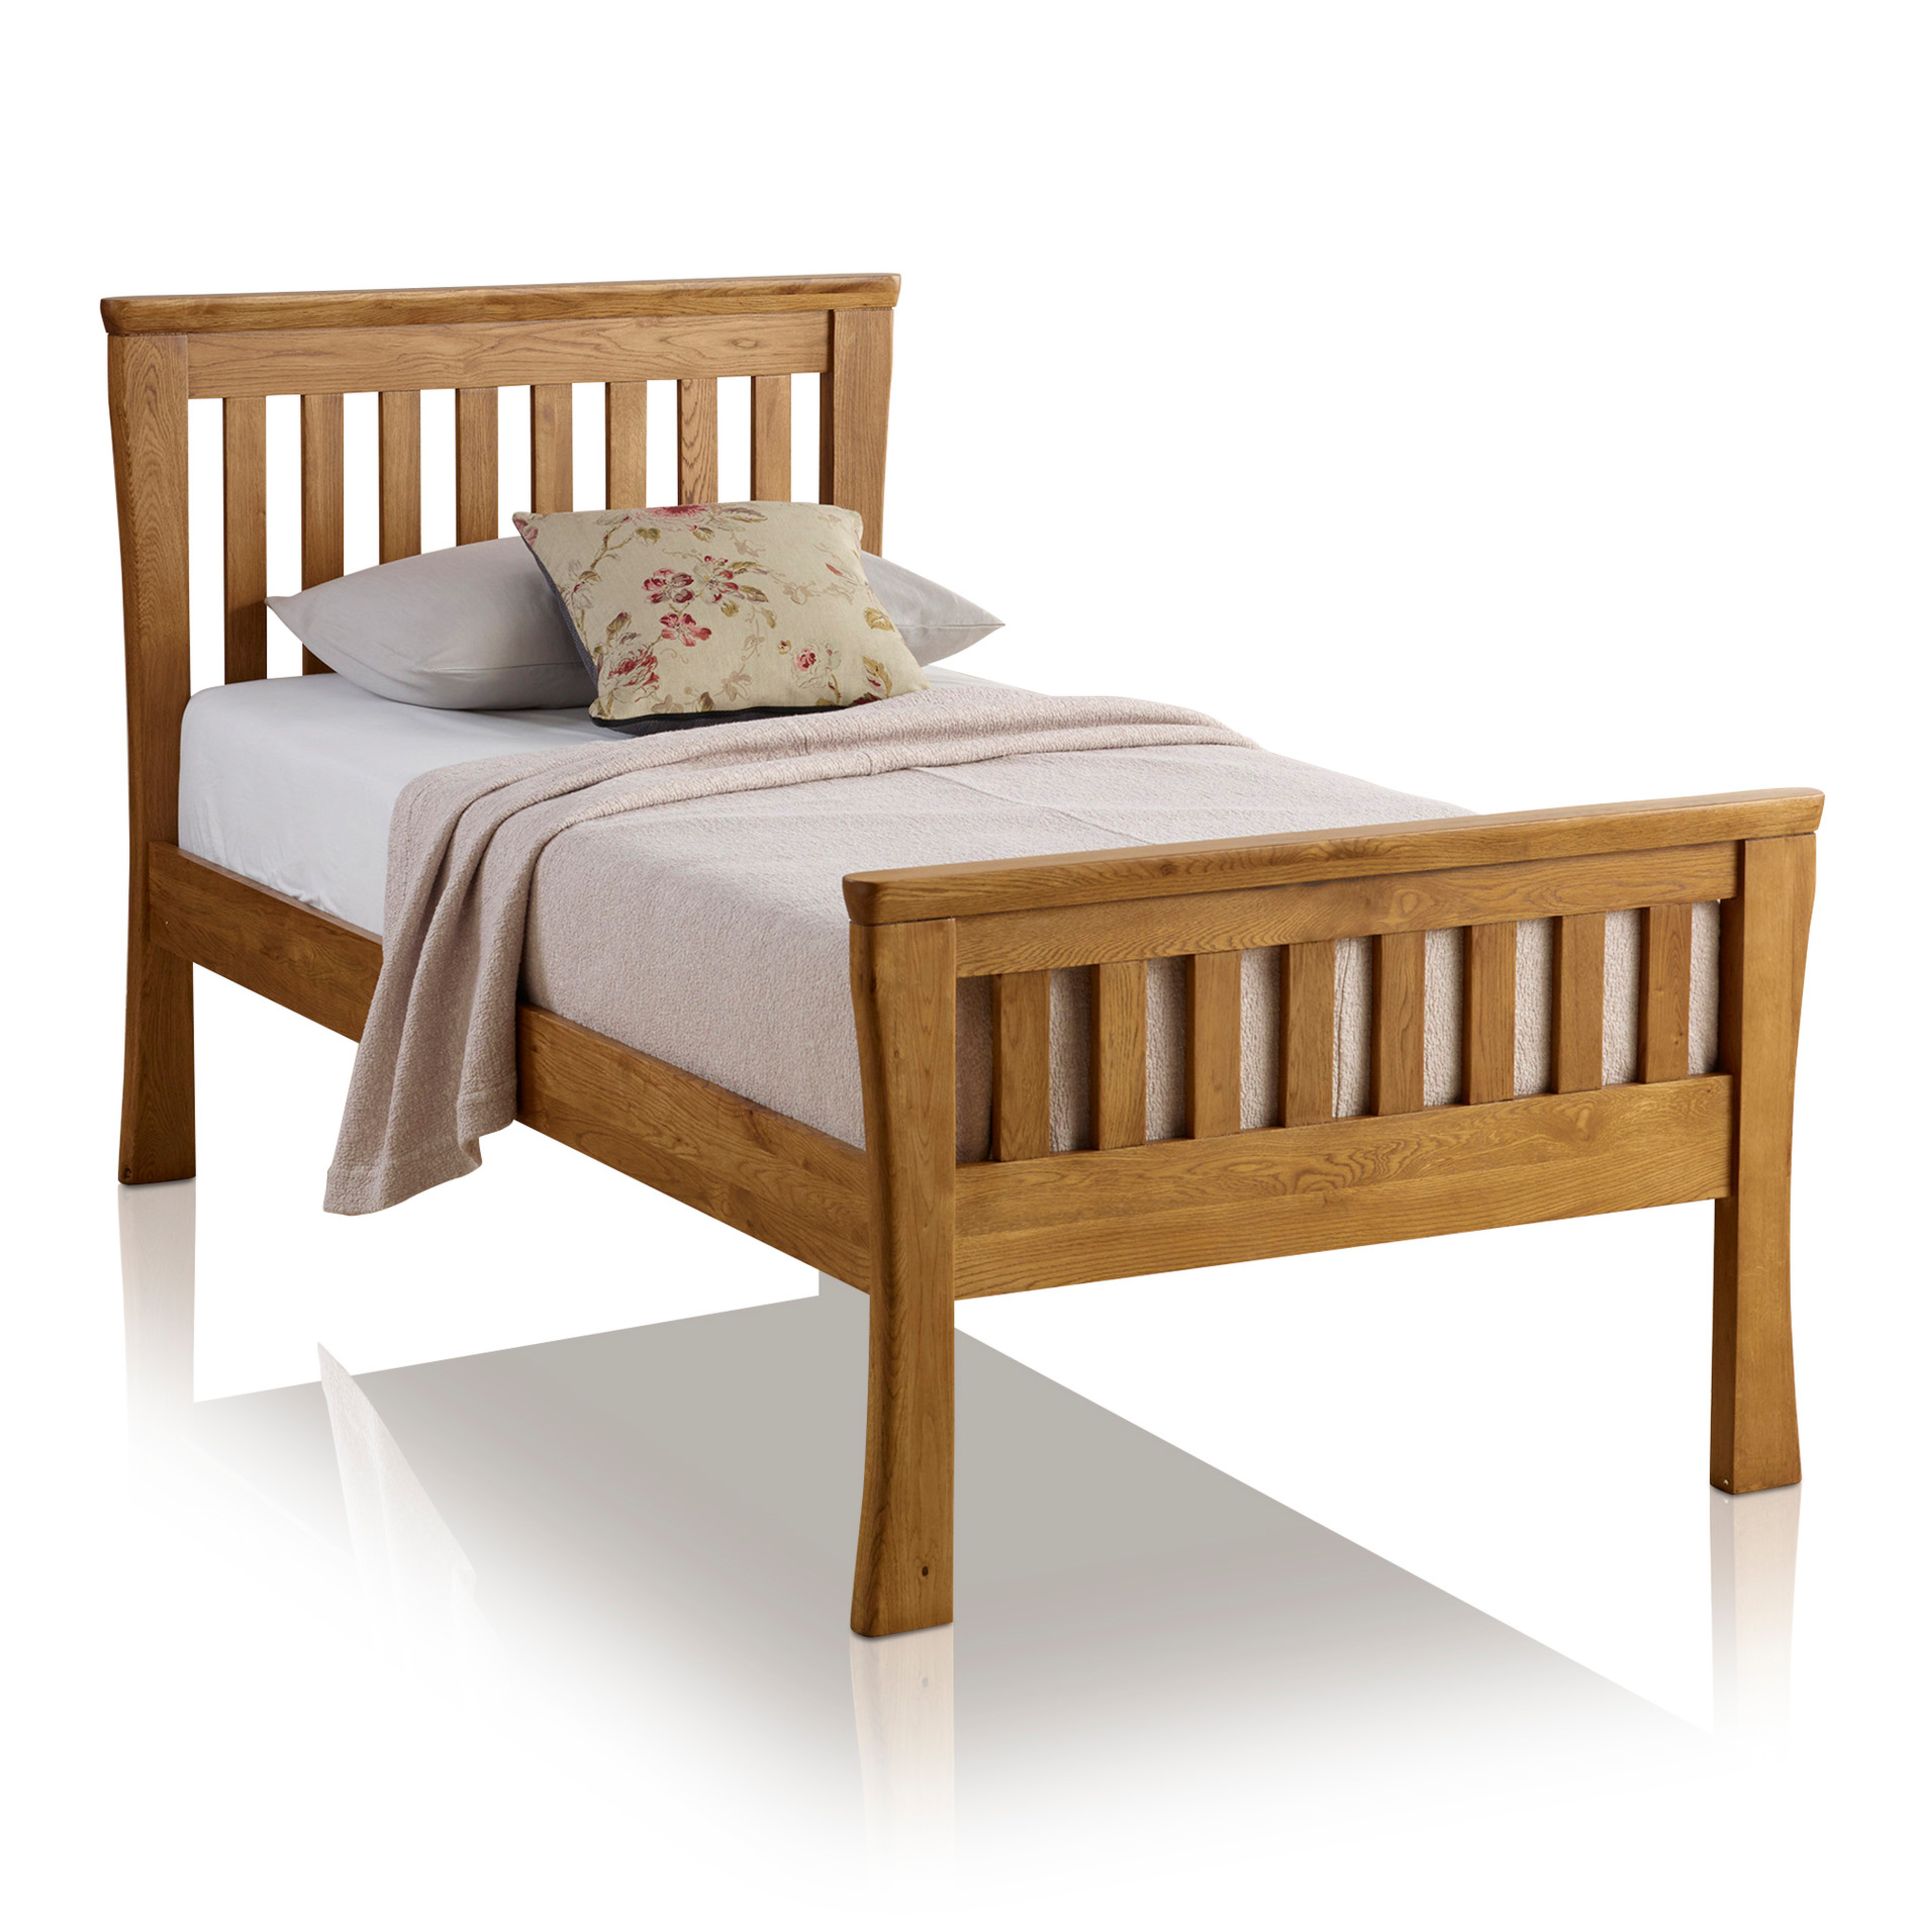 Oak Furnitureland Orrick Rustic Solid Oak Single Bed RRP 284.76 - Image 2 of 2